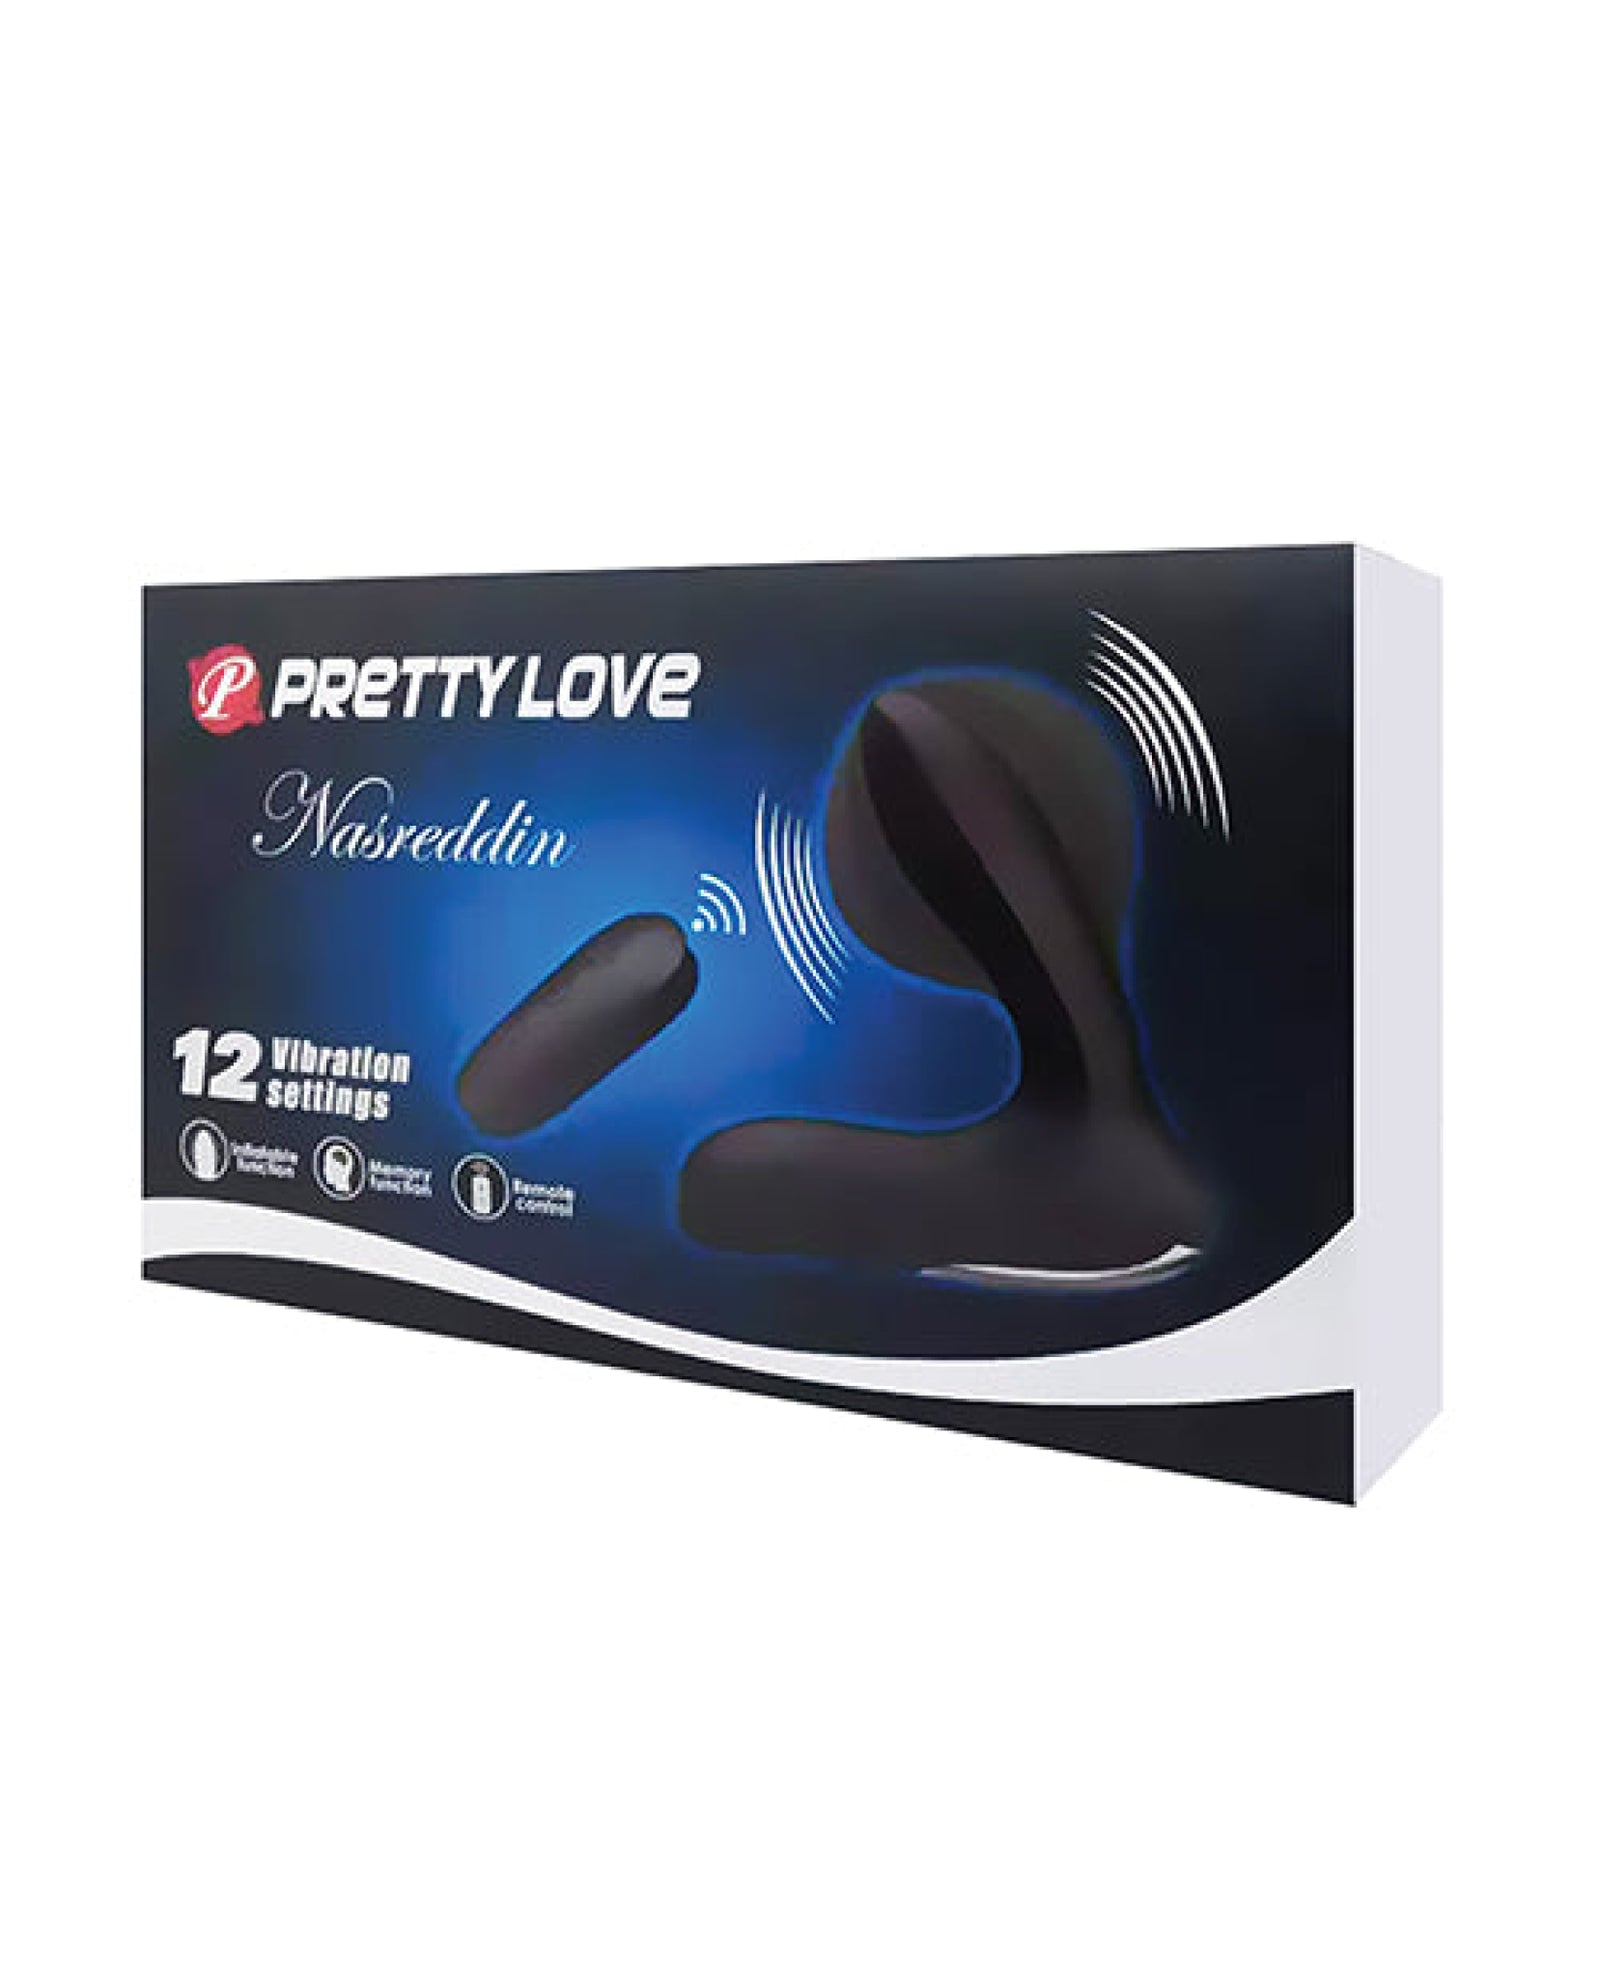 Pretty Love Nasreddin Inflatable Prostate Massager - Black Pretty Love